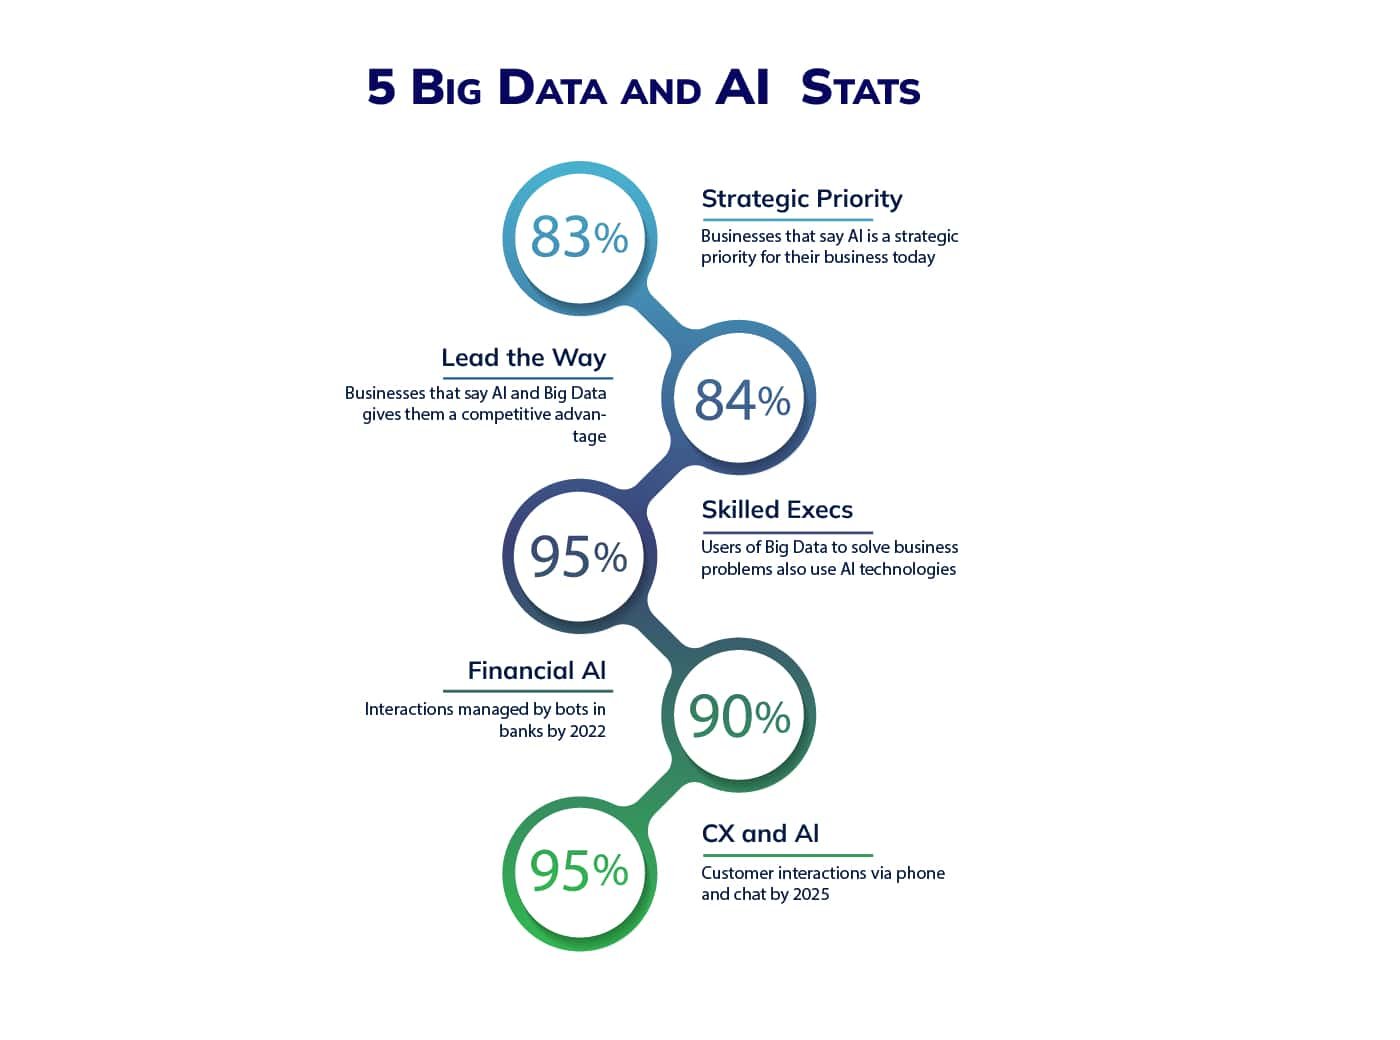 5 big data and AI stats